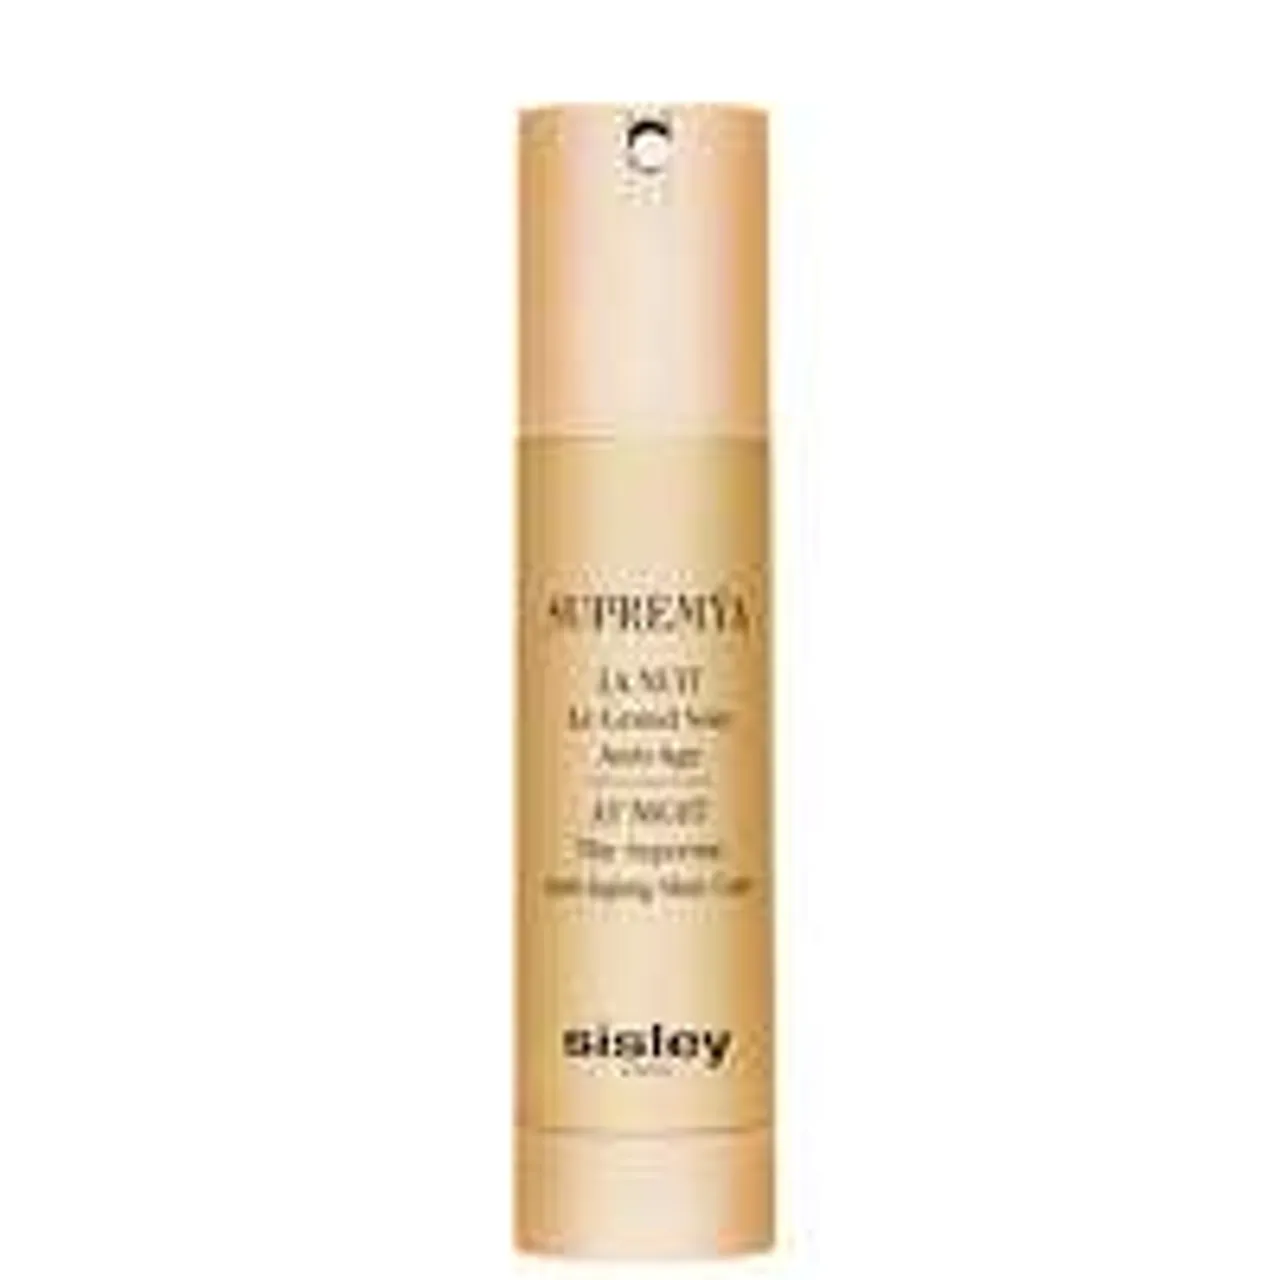 Sisley Supremya At Night The Supreme Anti-Aging Skin Care 50ml